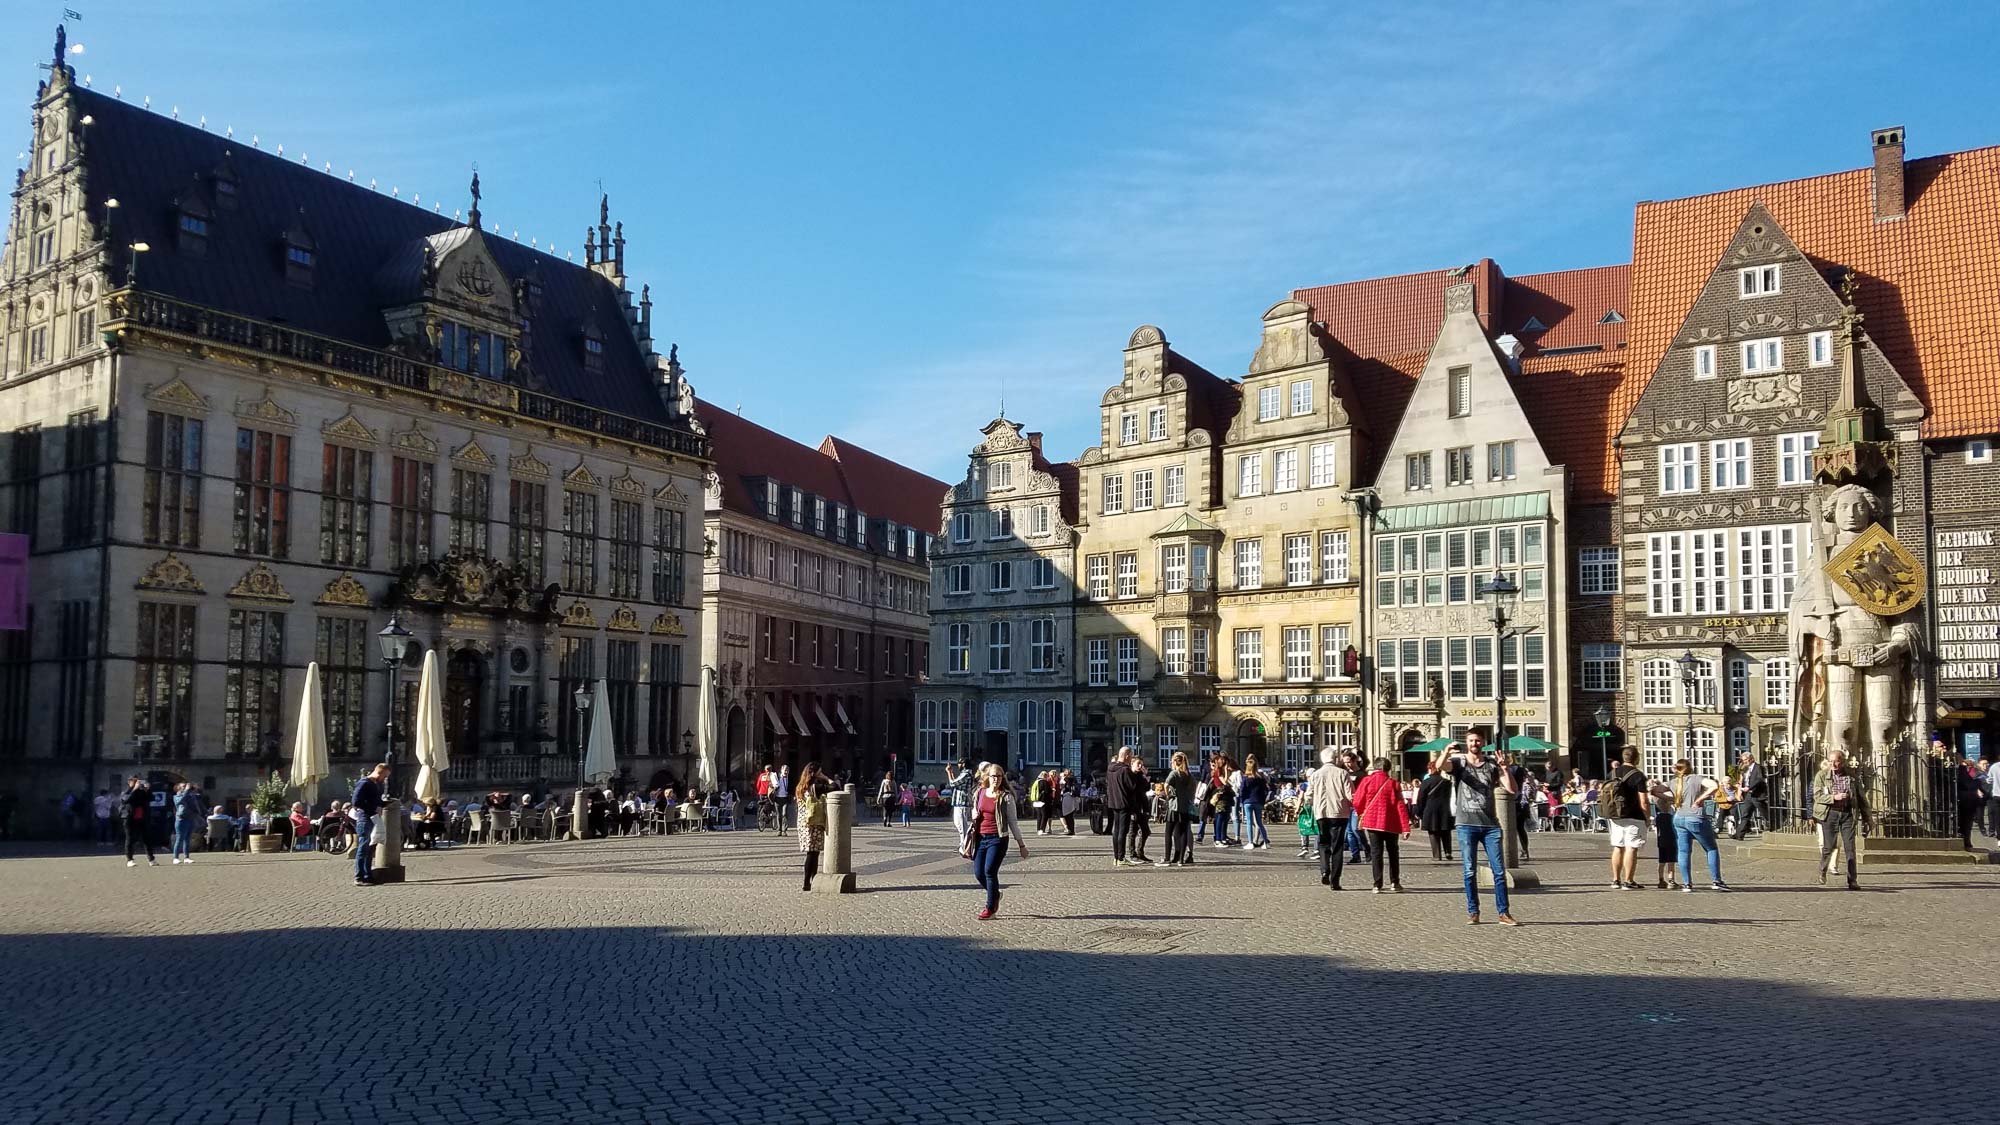 The Marktplatz in Bremen, Germany.